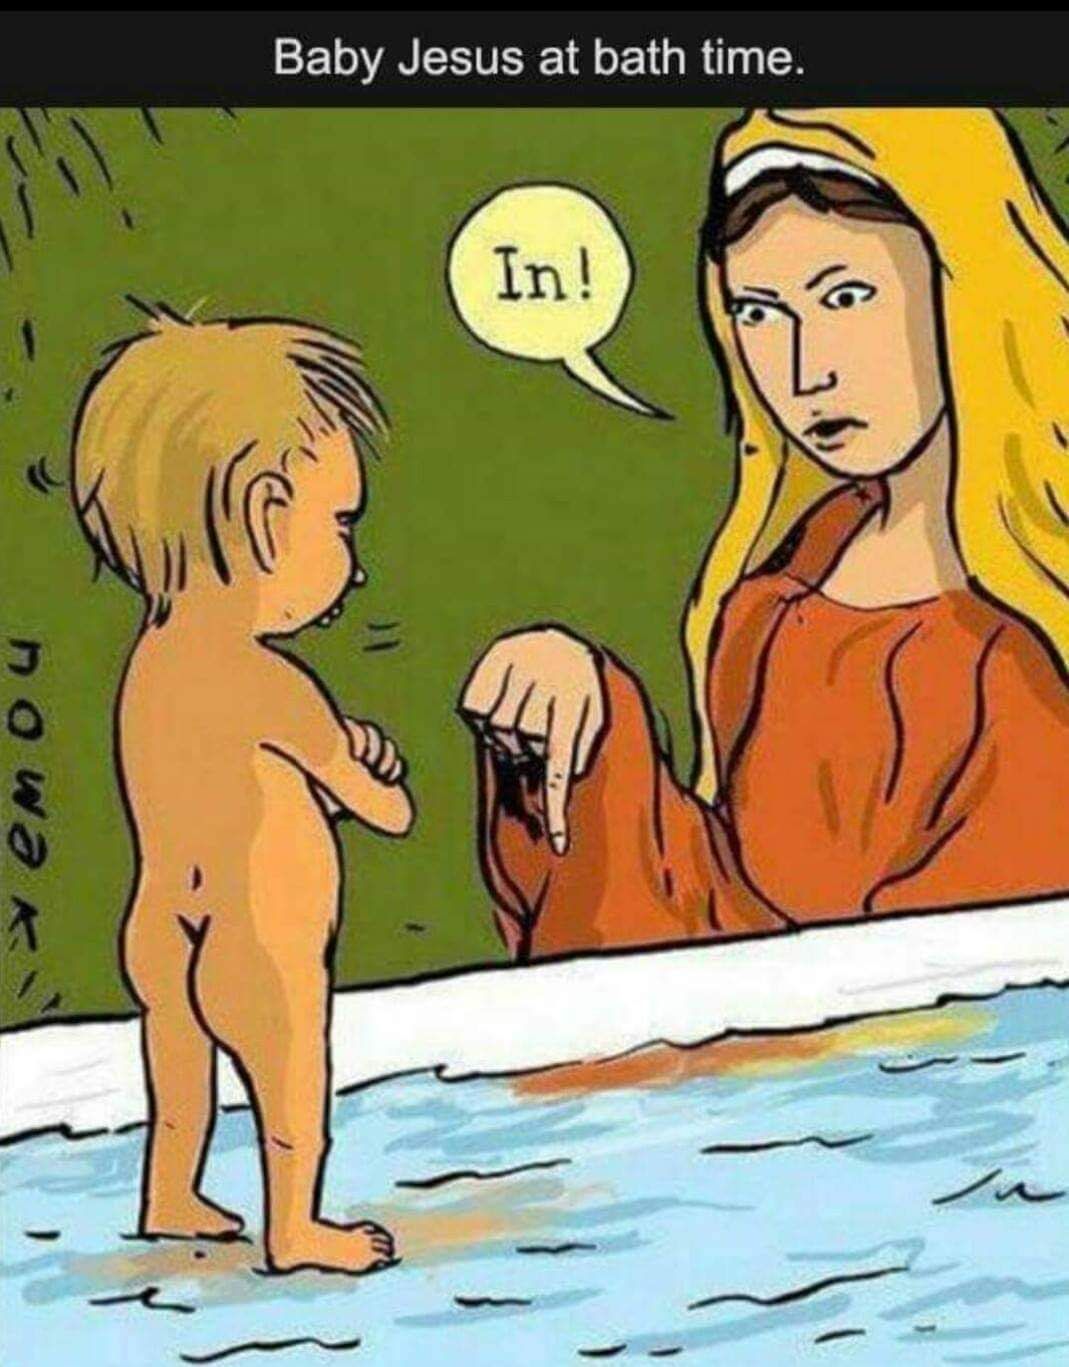 Baby Jesus at bathtime.